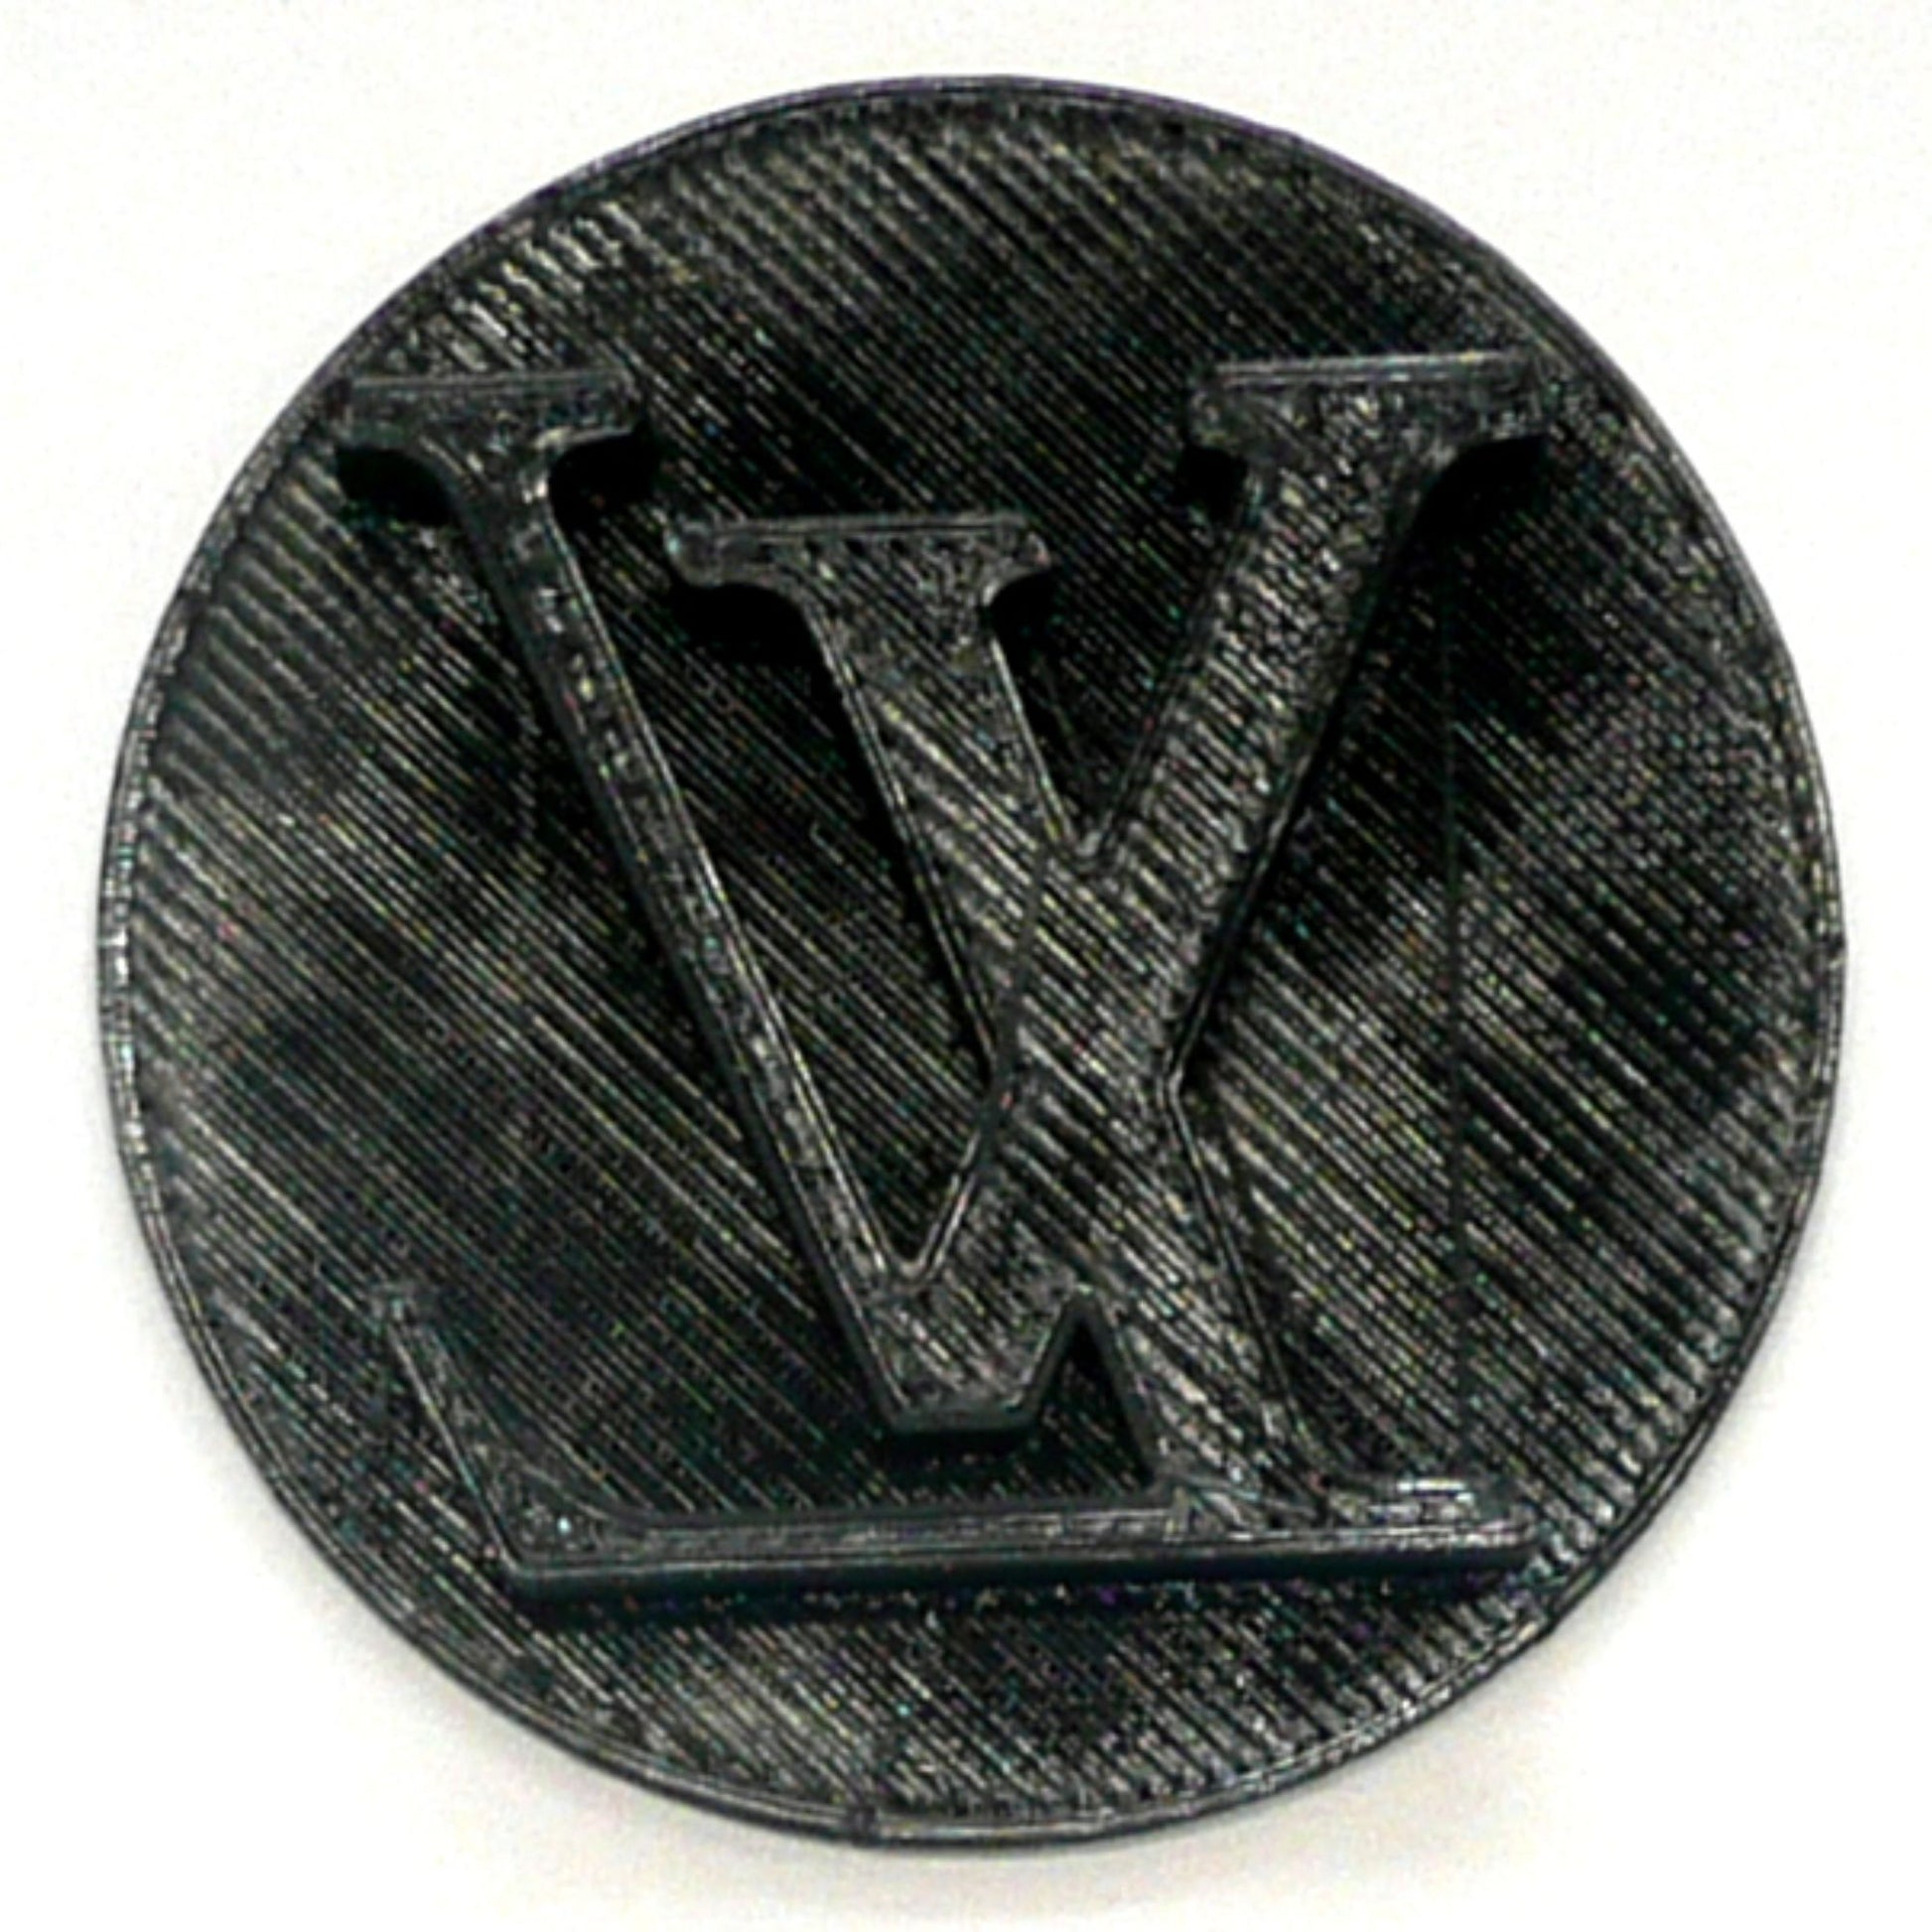 LV Louis Vuitton Luxury Brand Imprint Cookie Stamp Embosser USA